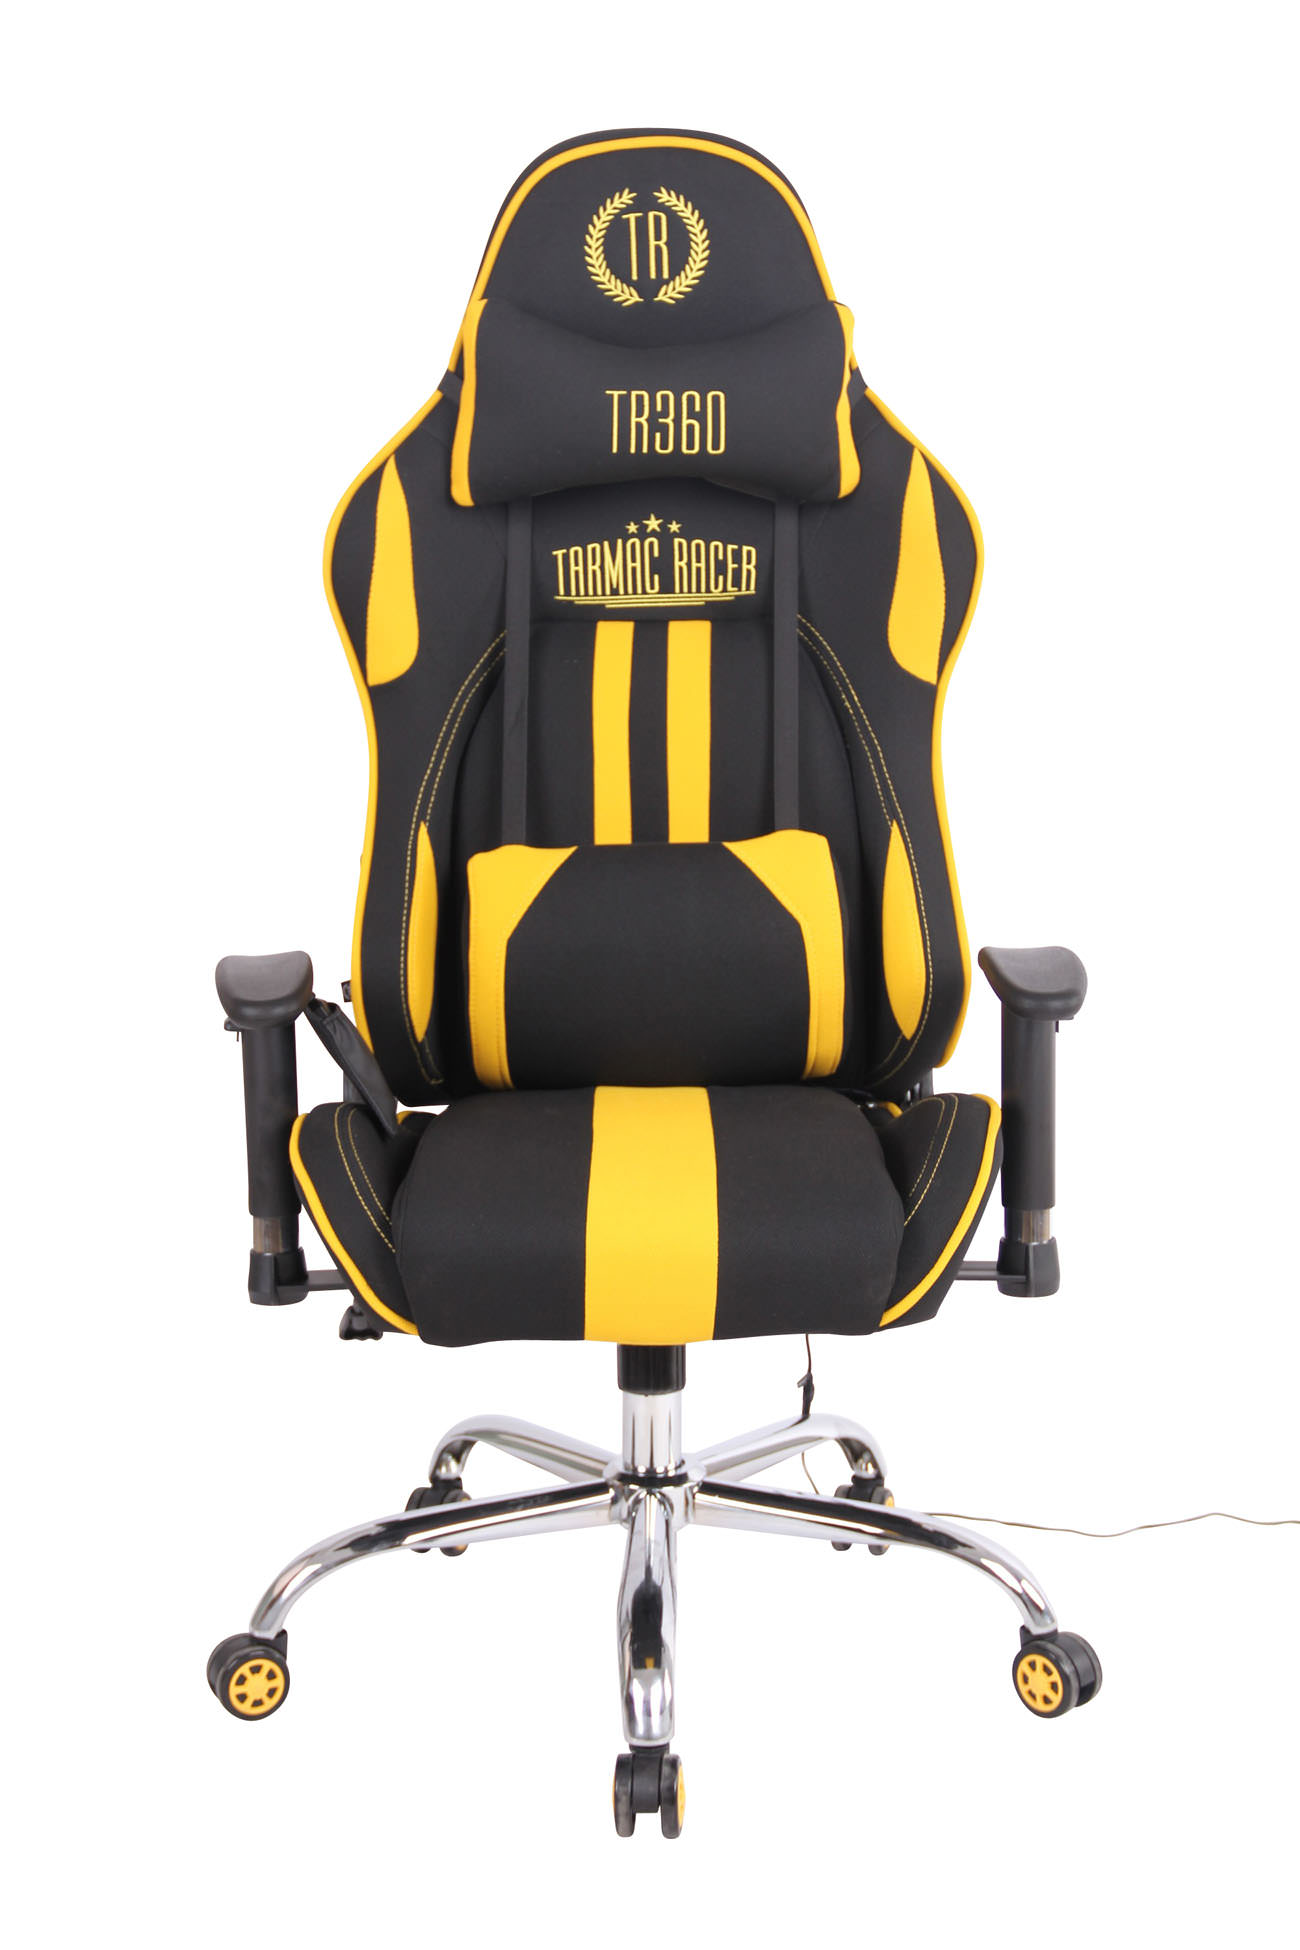 Schwarz-gelber Gaming-Stuhl